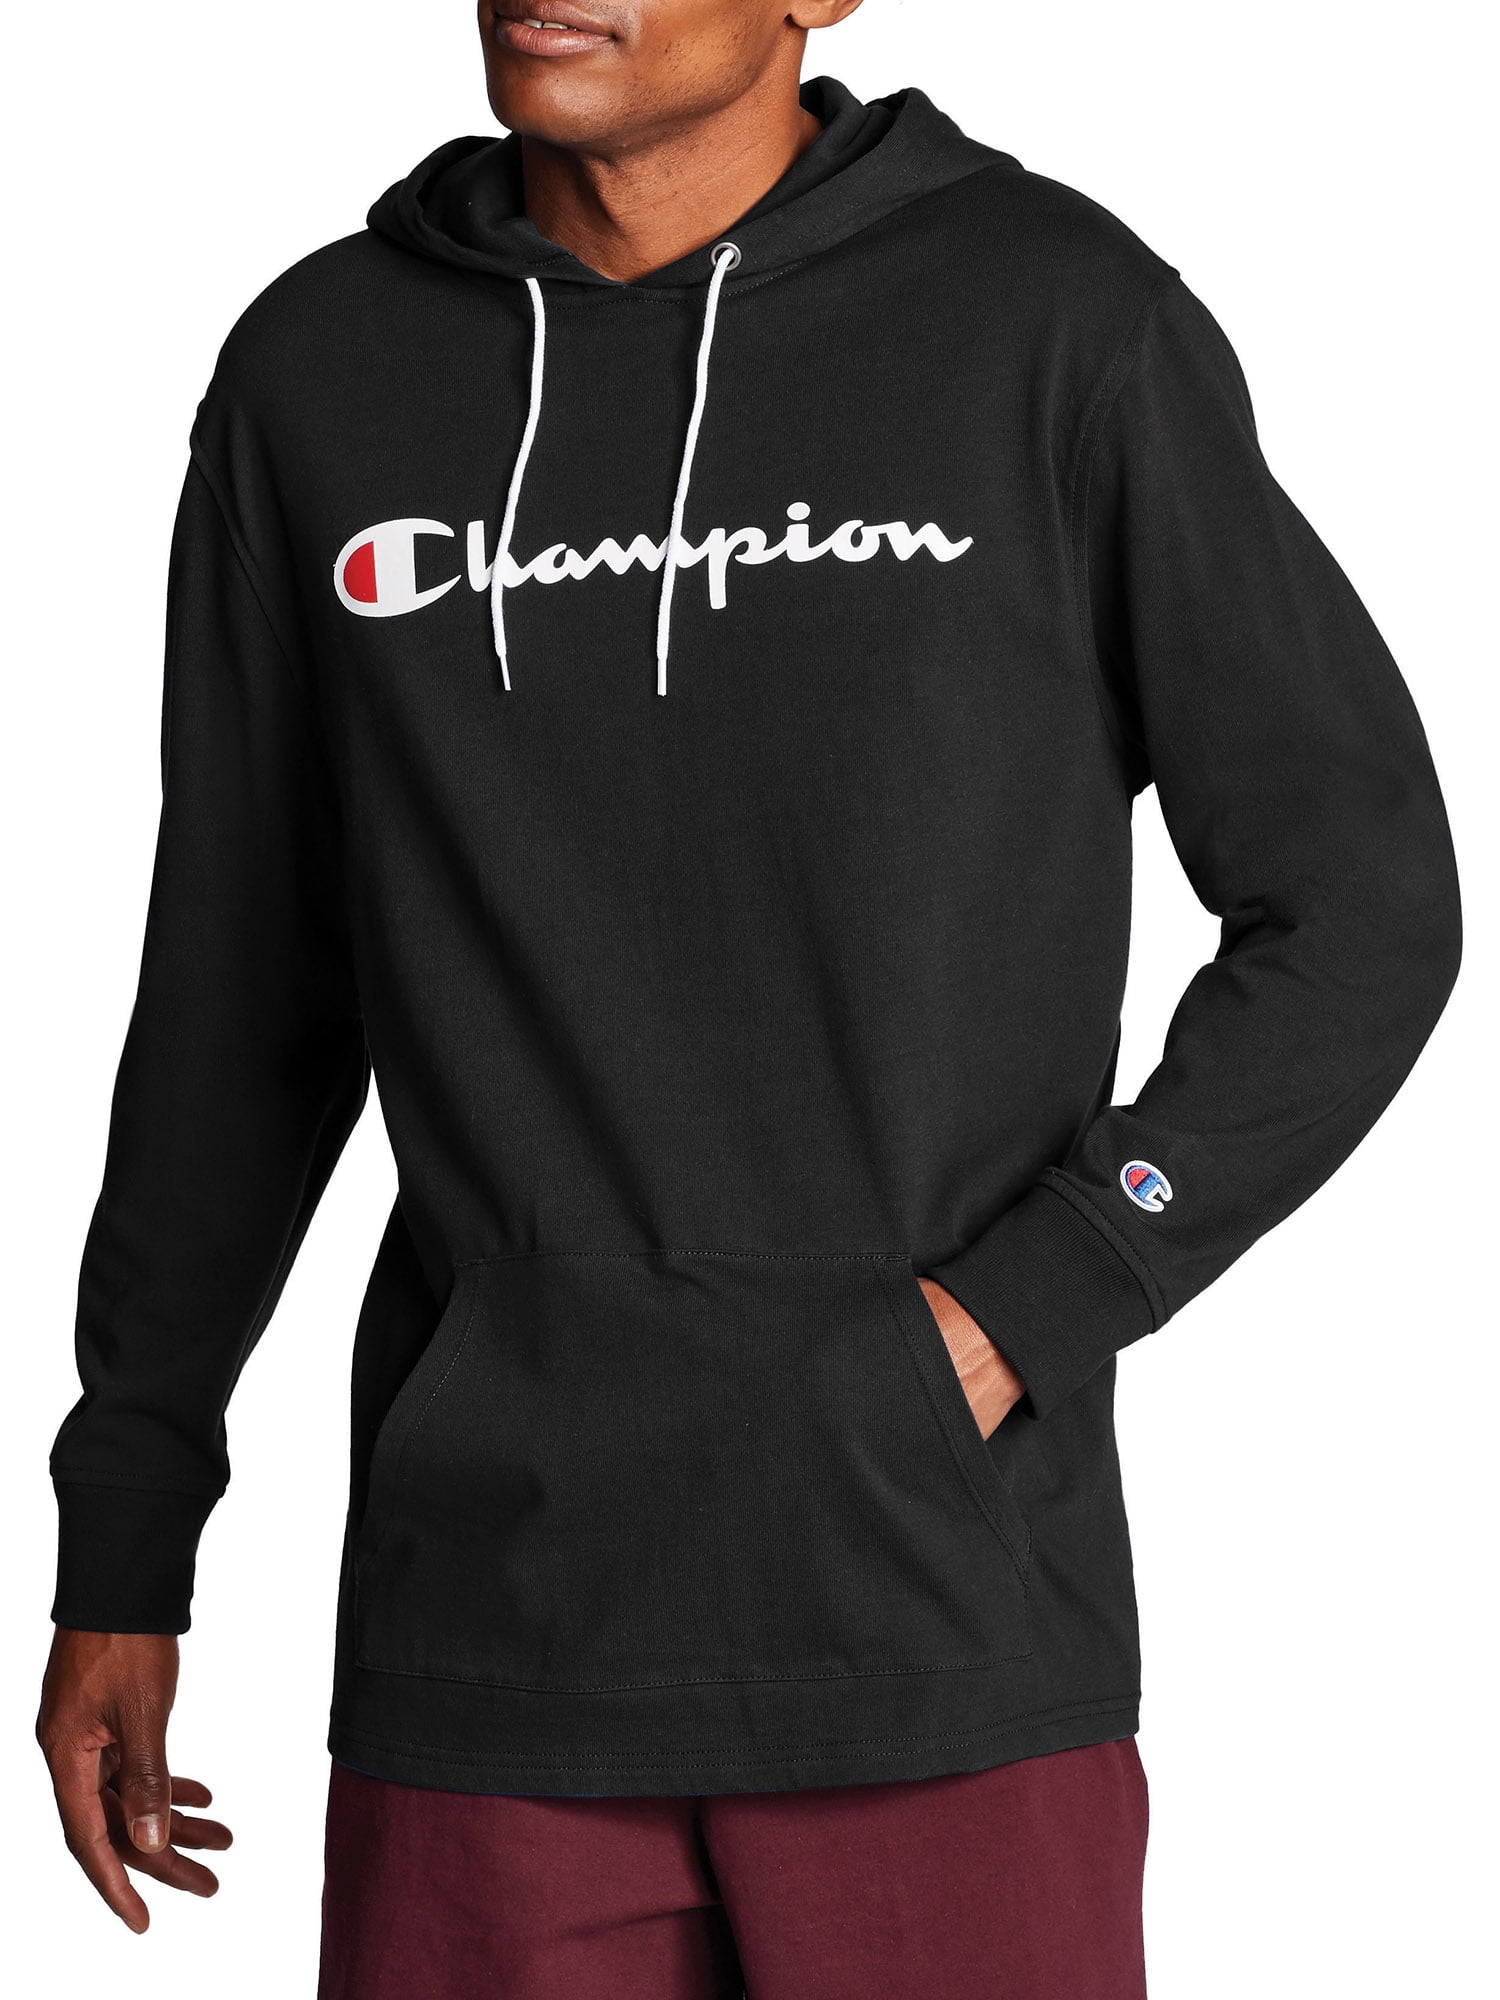 men's black champion hoodie